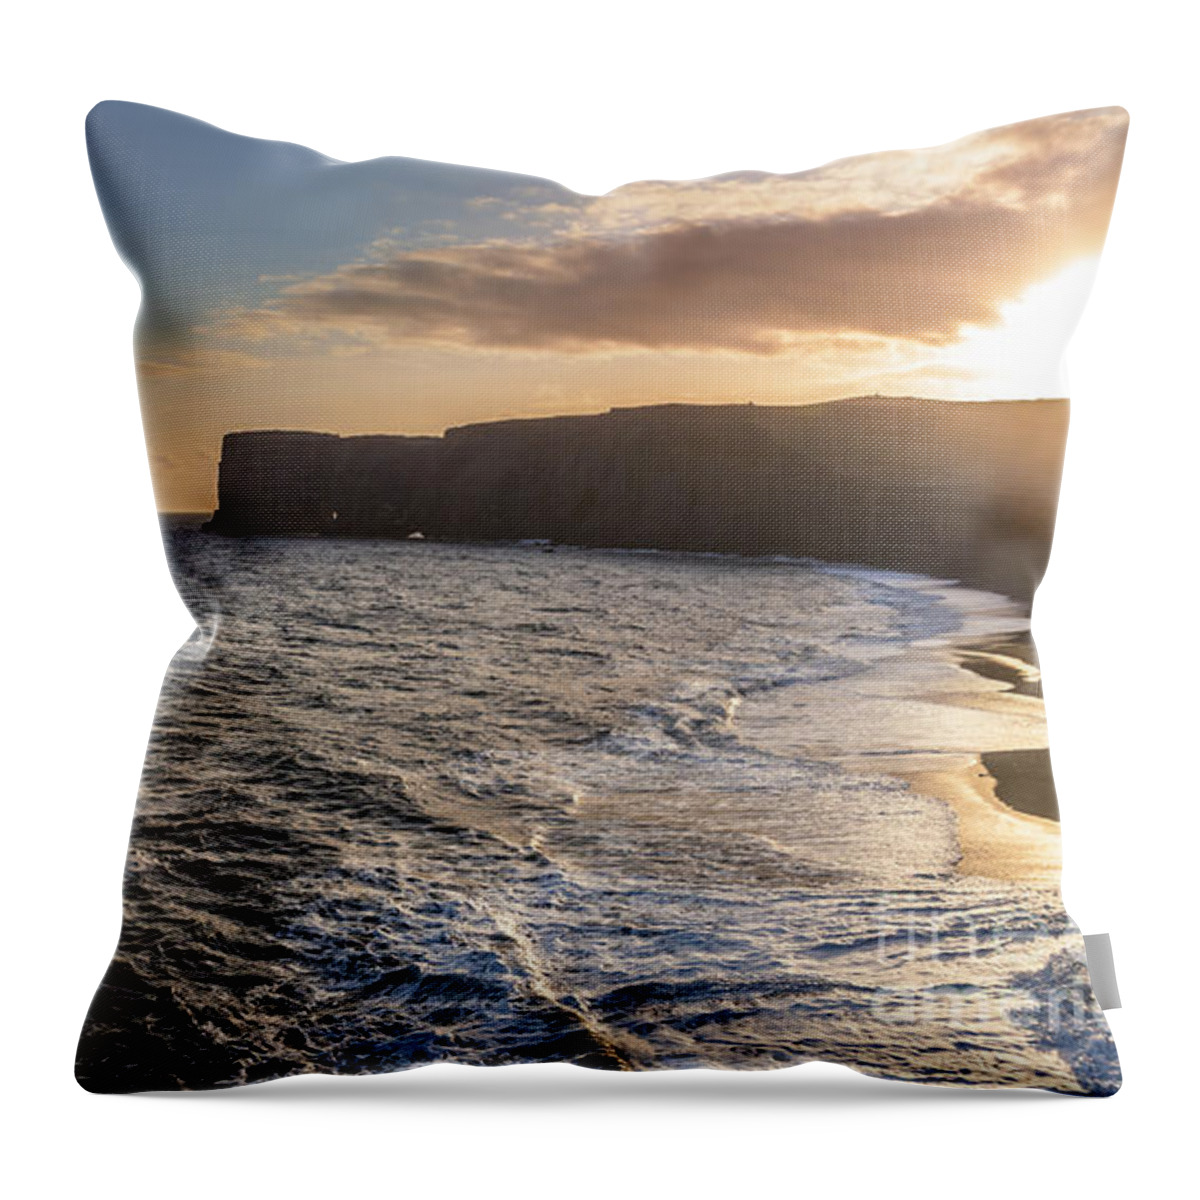 Dyrholaey Throw Pillow featuring the photograph Dyrholaey iceland at sunset by Gunnar Orn Arnason